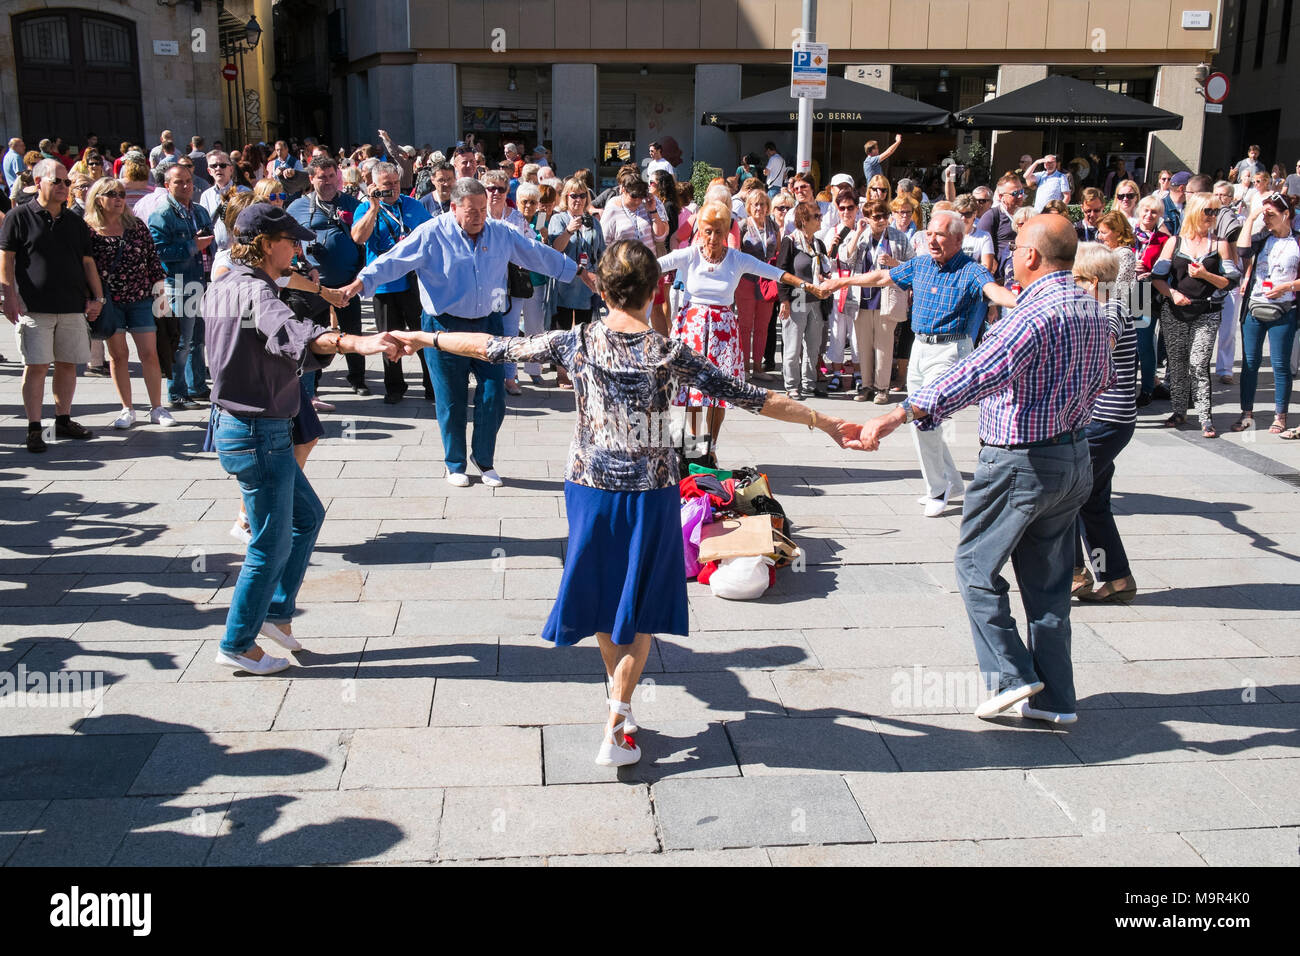 Catlan dancers in Placa Nova, Barcelona Stock Photo